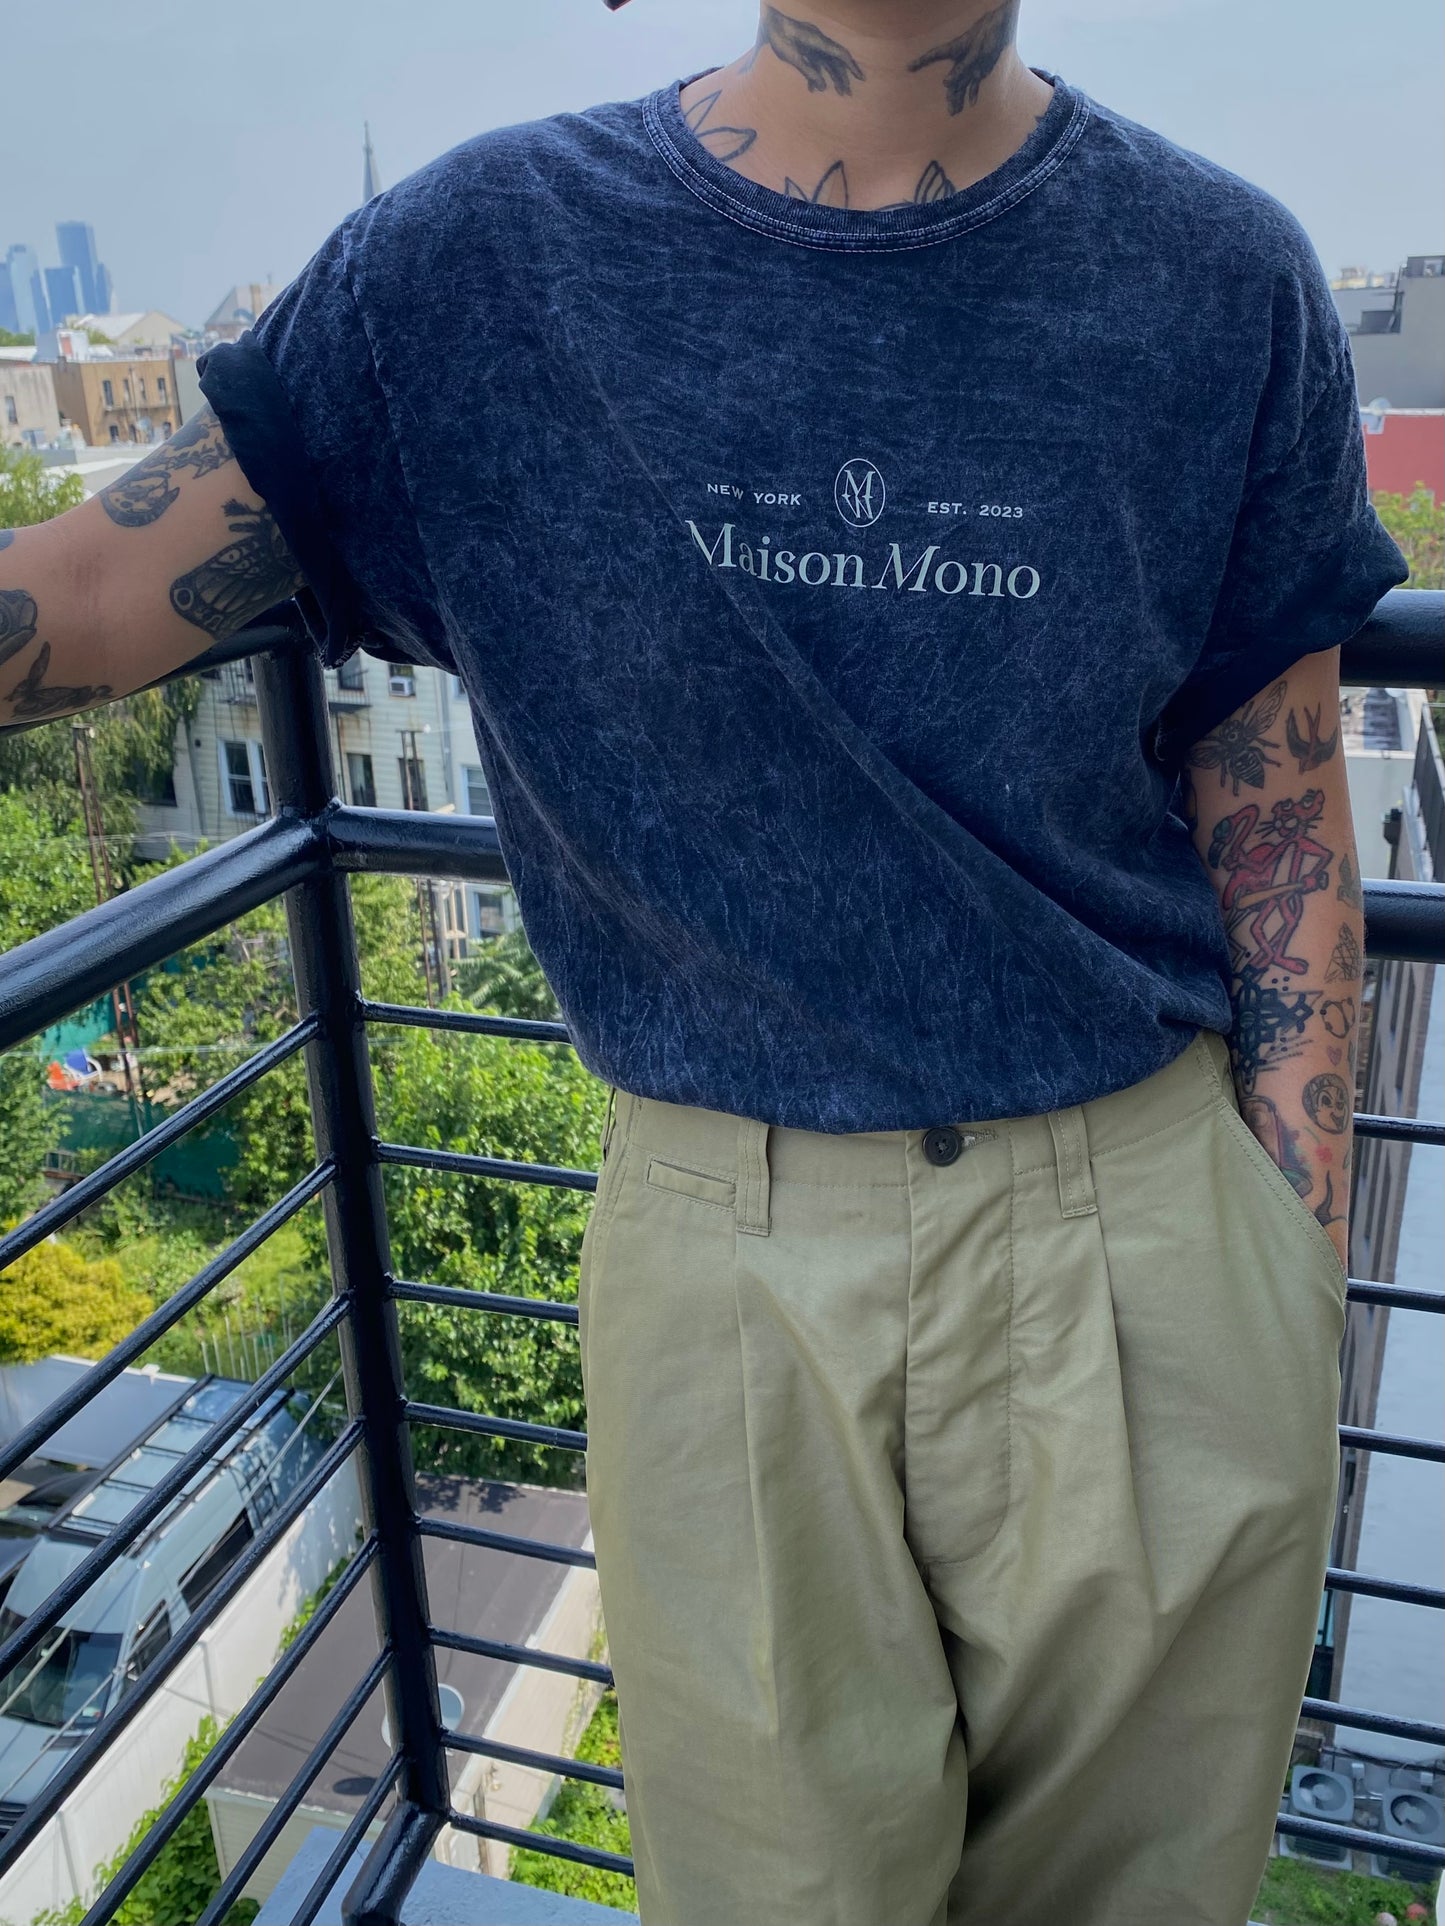 Maison Mono T-Shirt